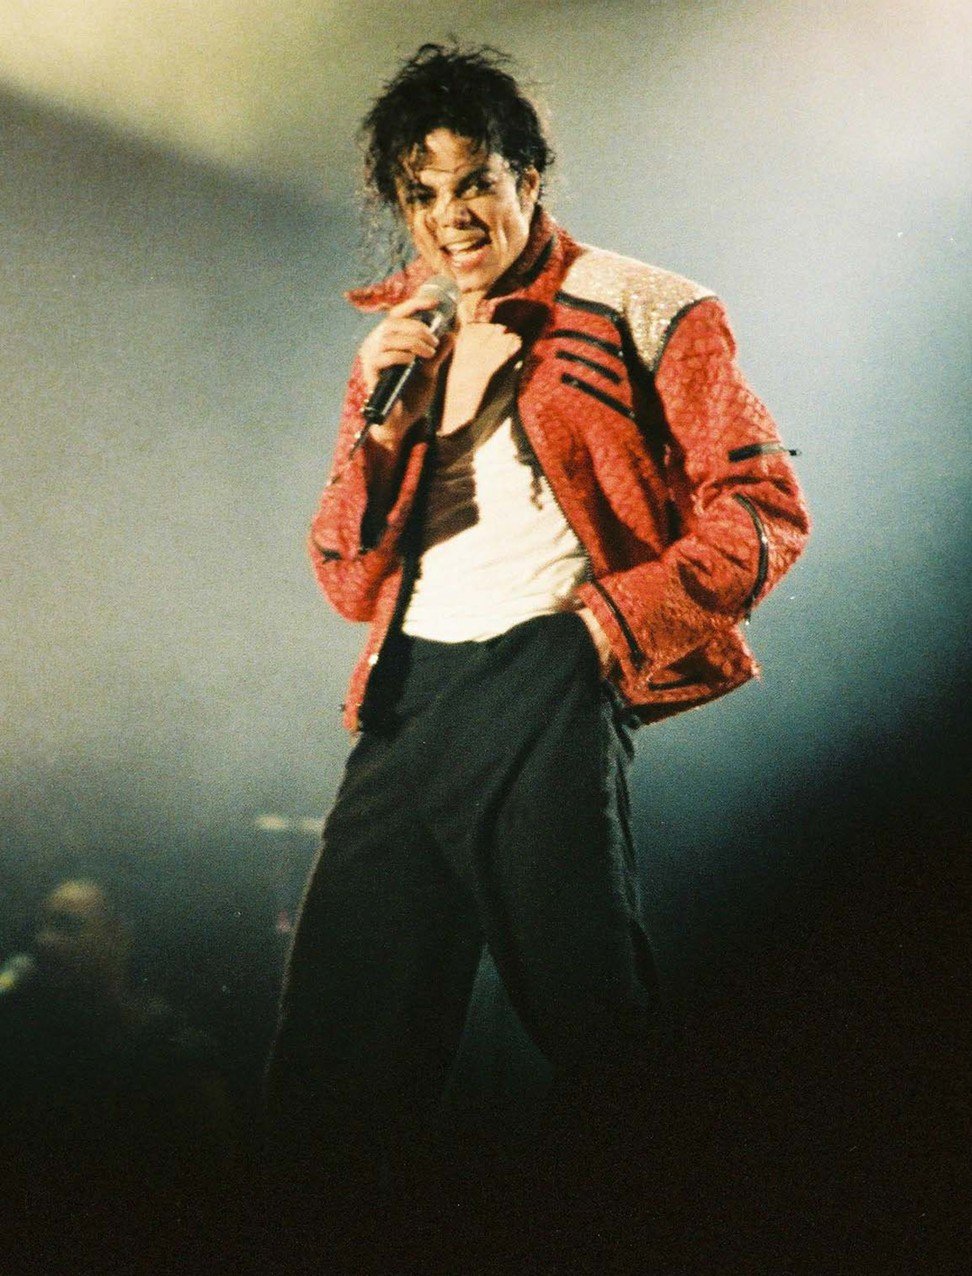 Sold at Auction: Michael Jackson Shirt & Pants